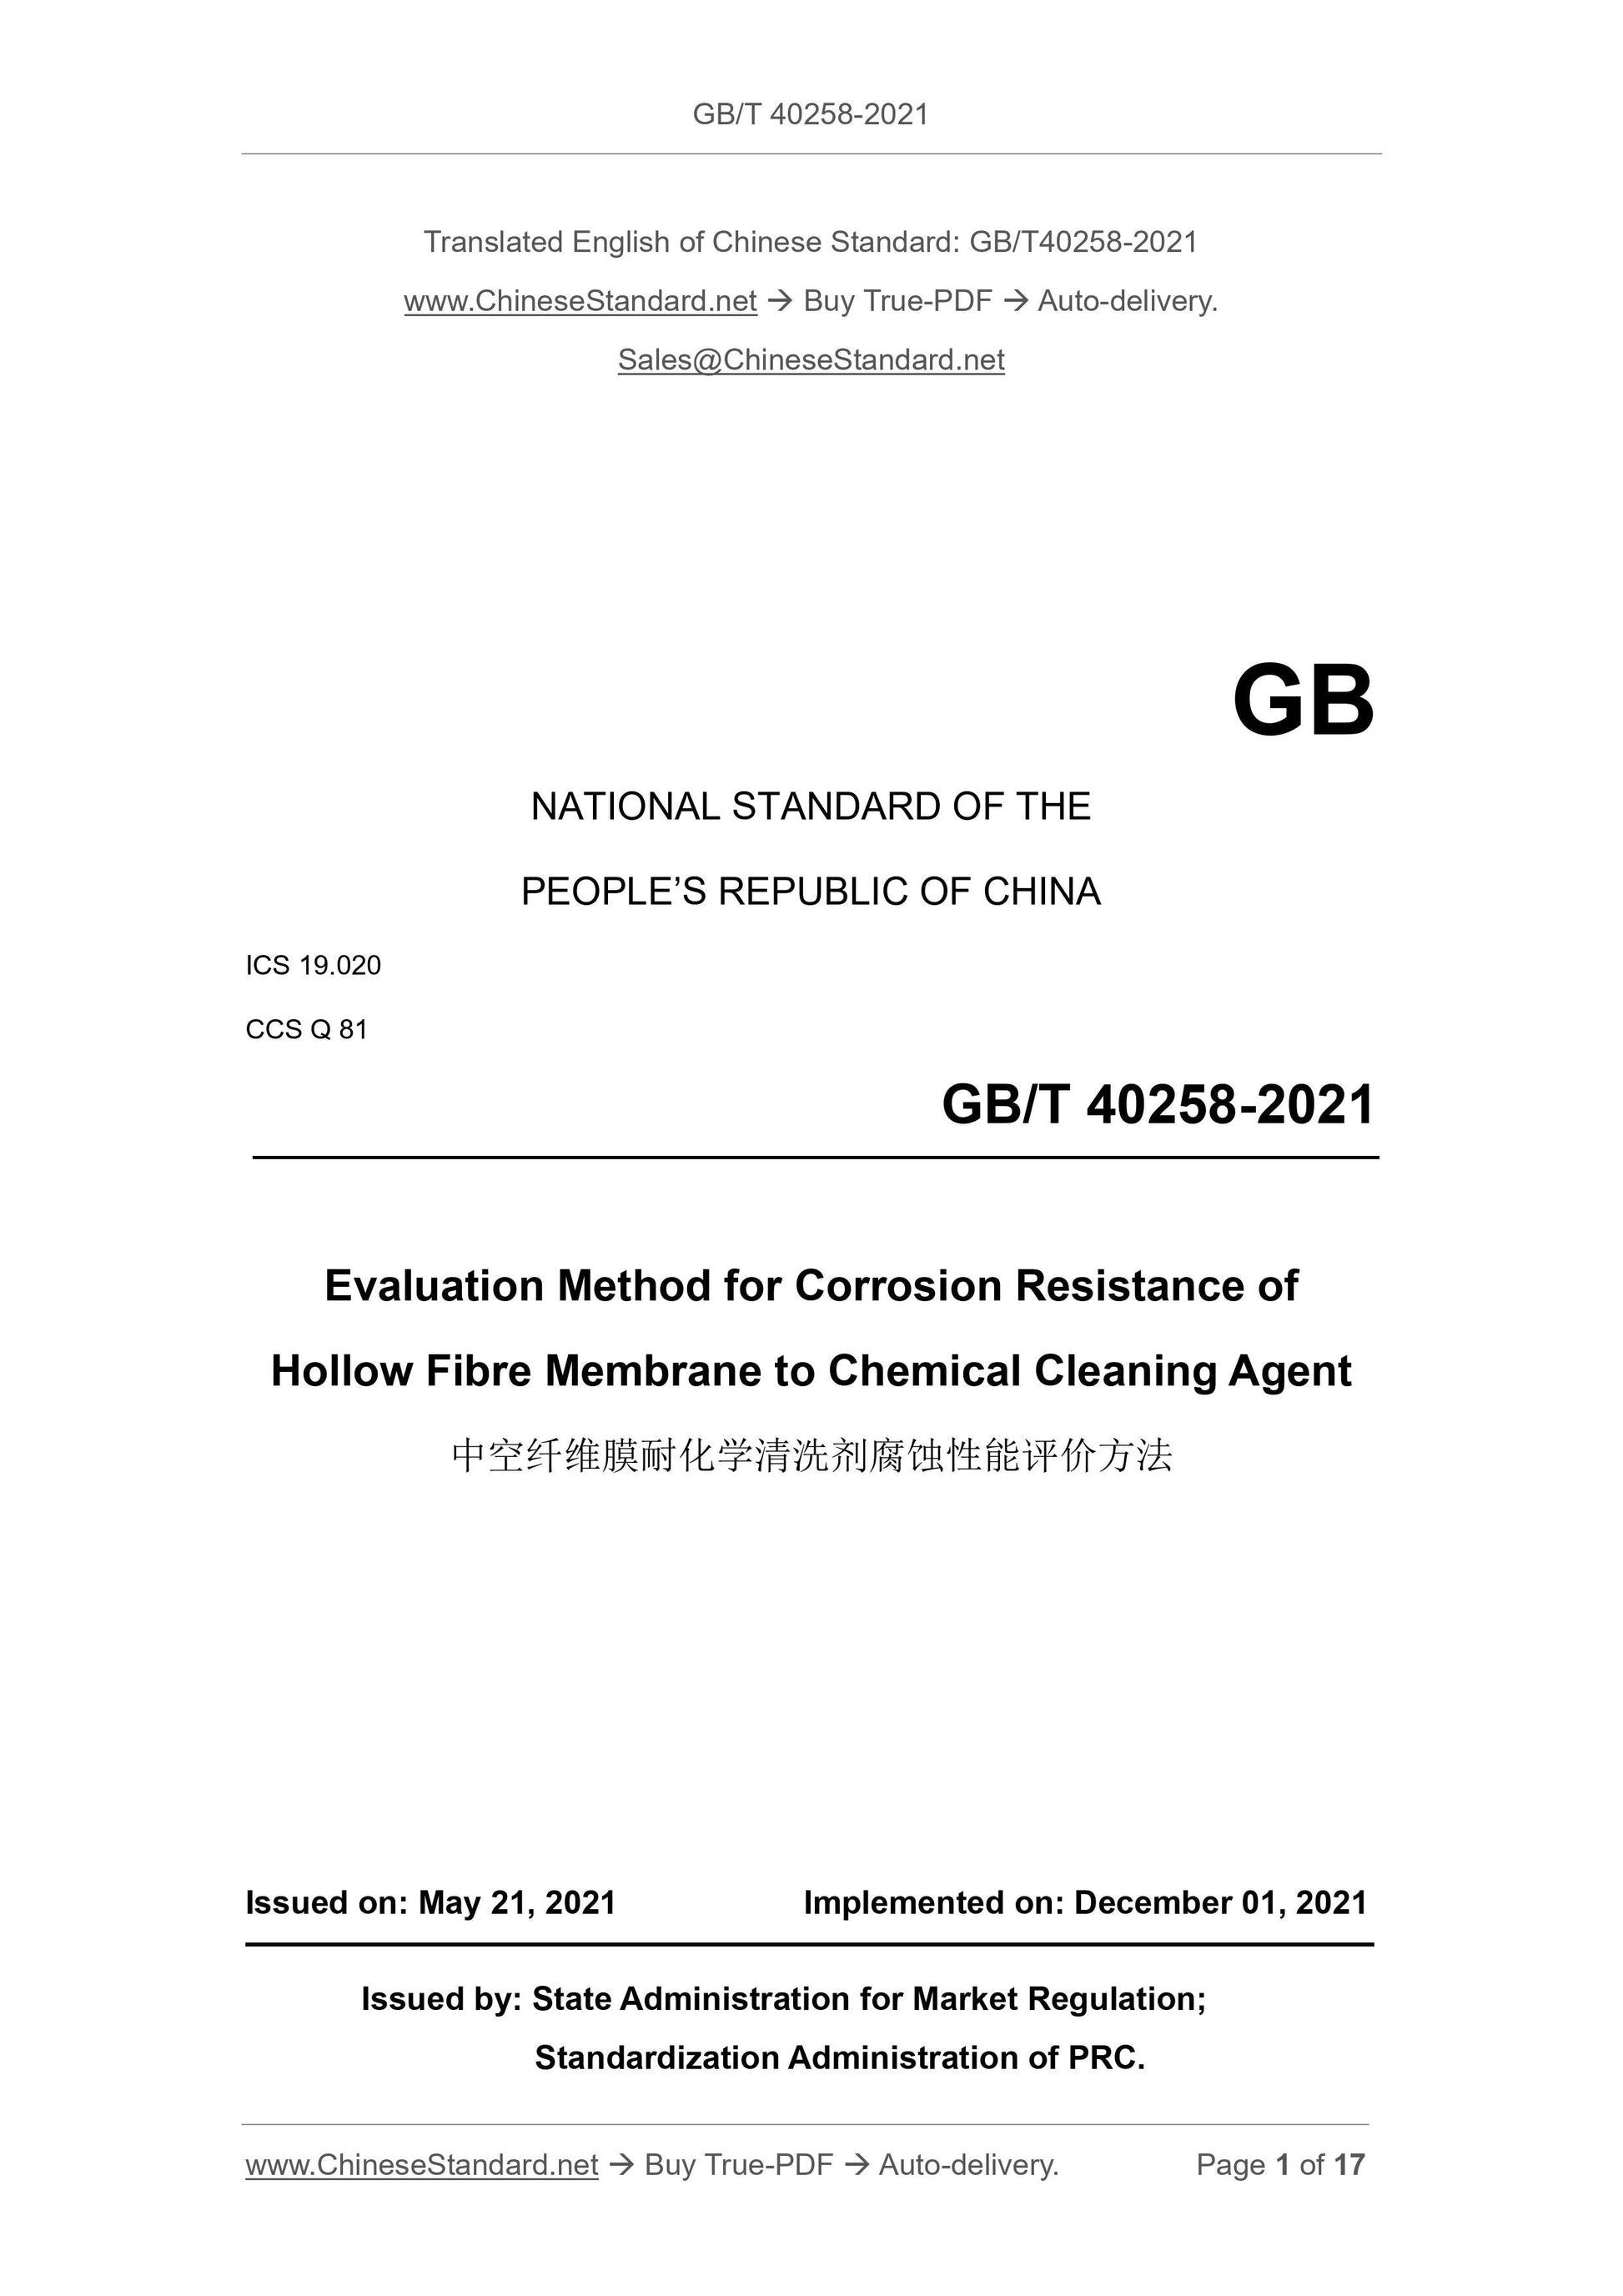 GBT40258-2021 Page 1